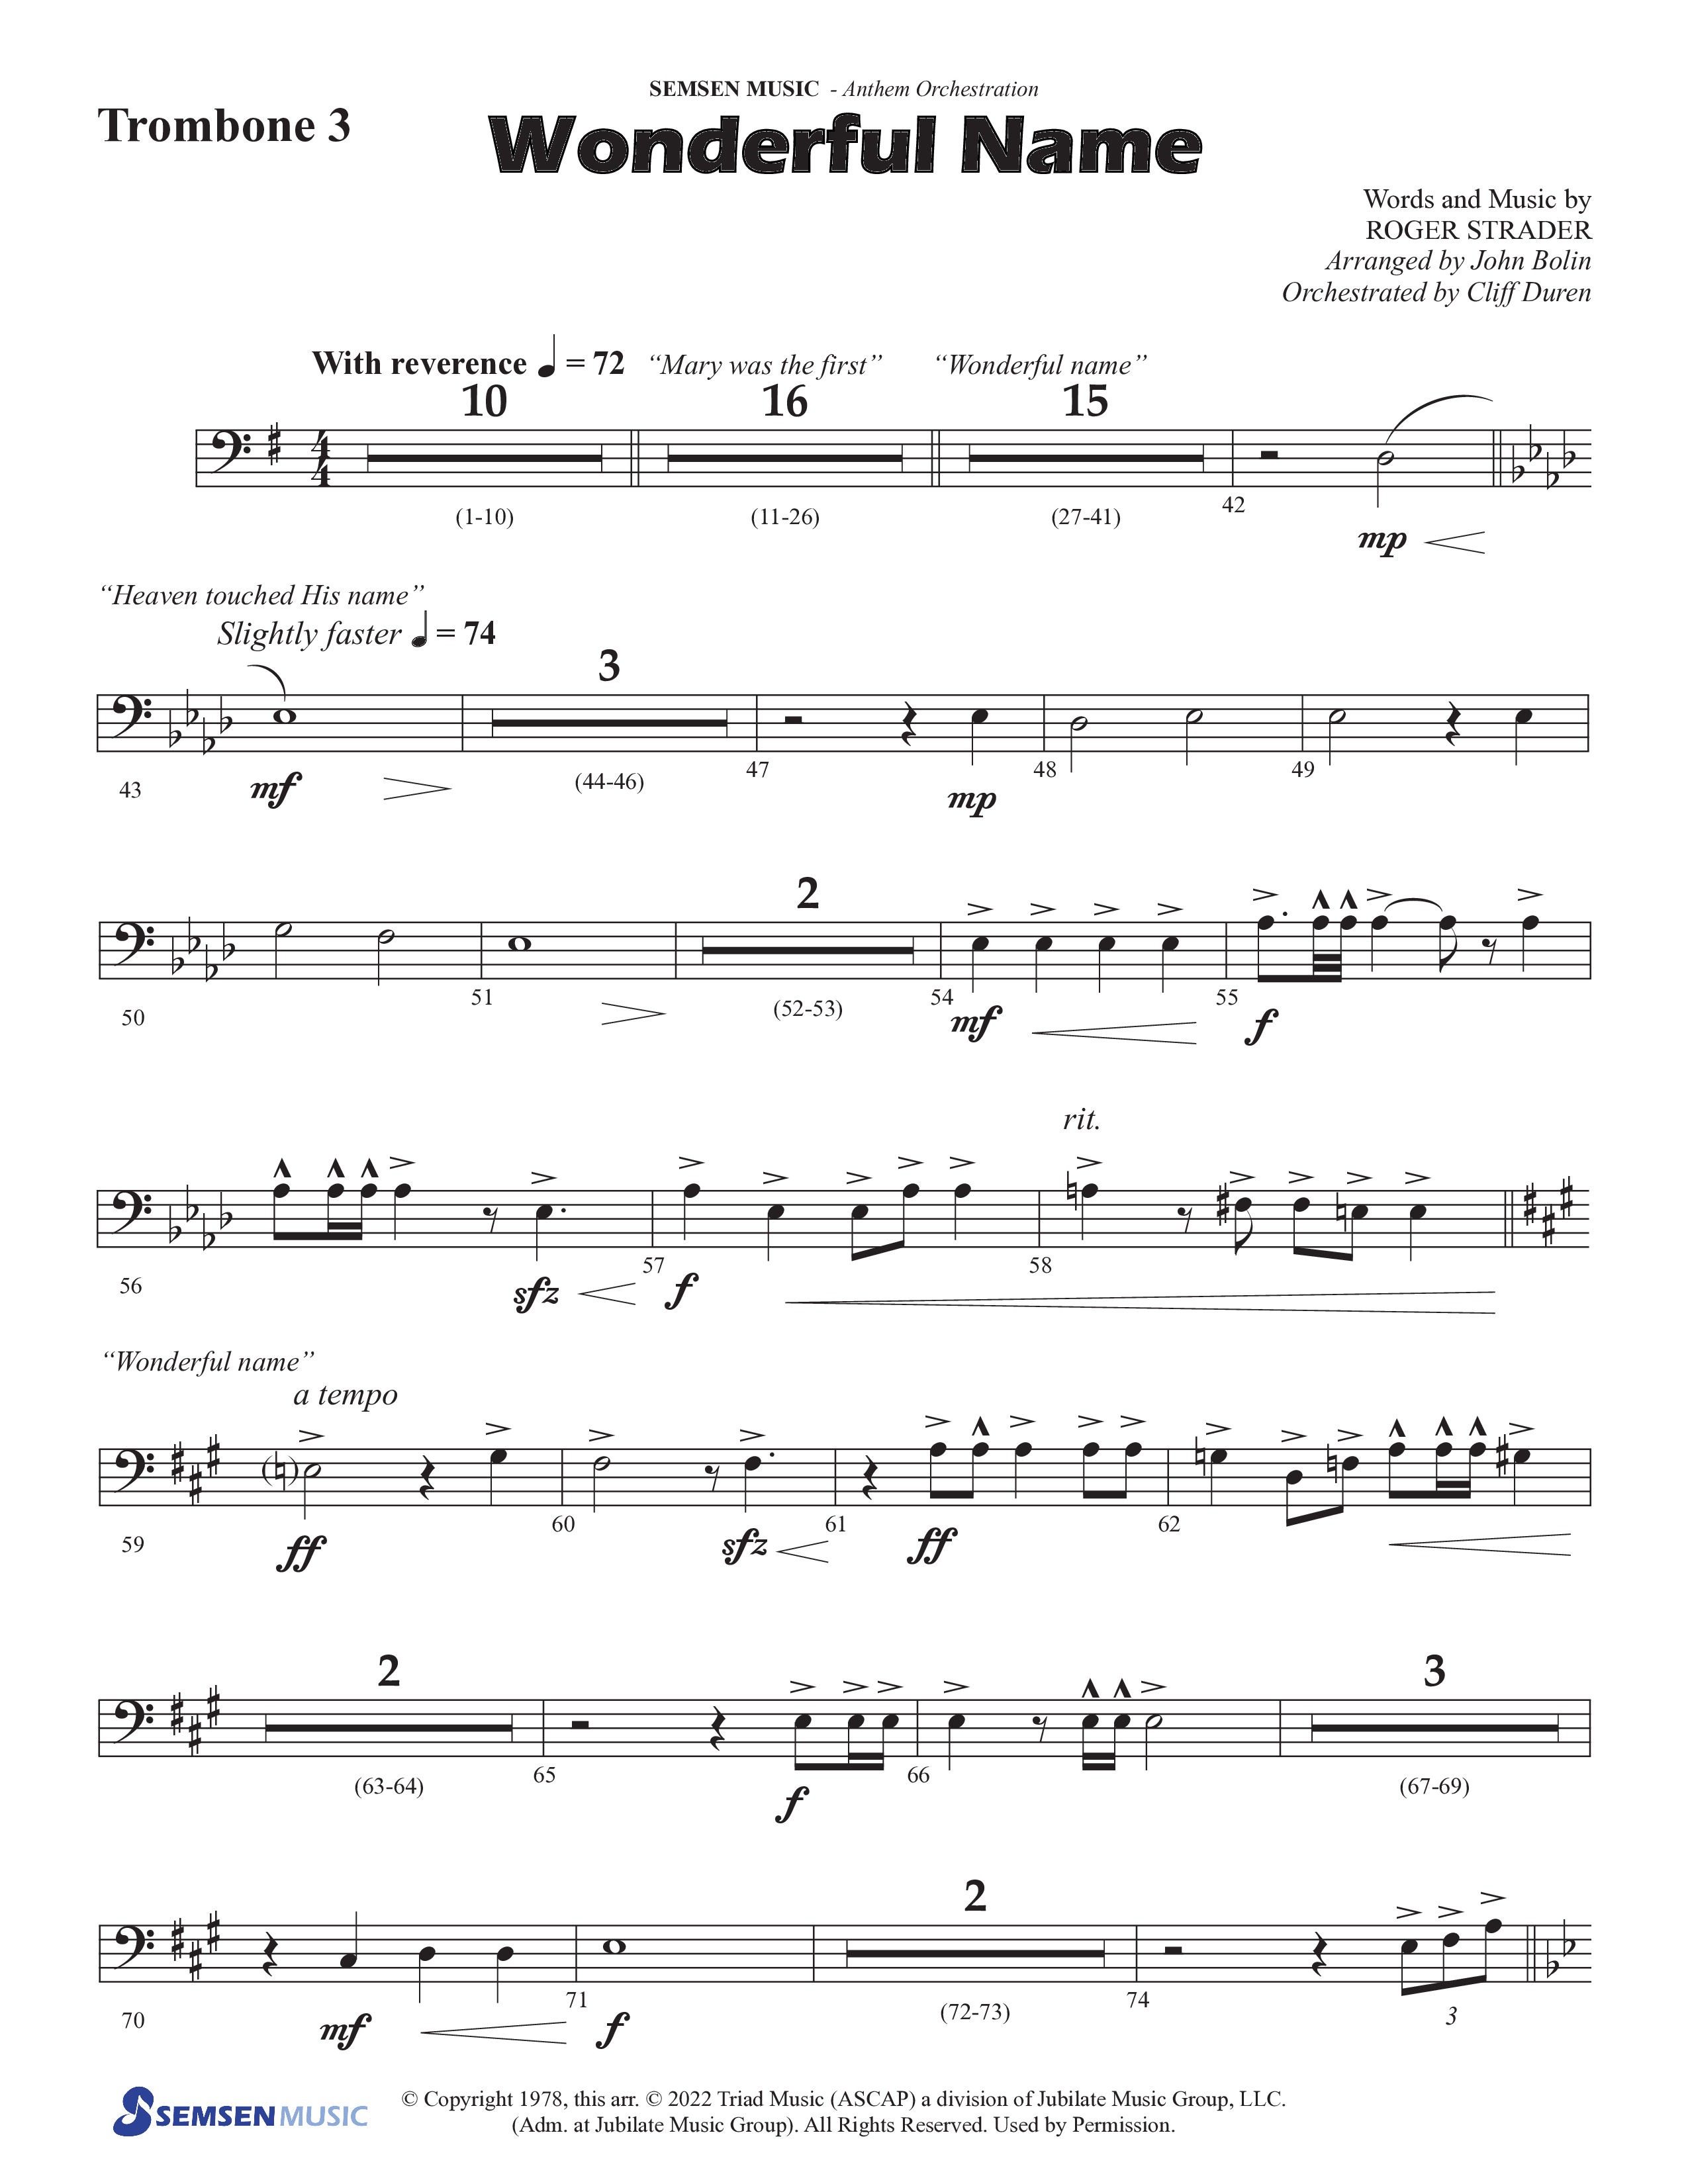 Wonderful Name (Choral Anthem SATB) Trombone 3 (Semsen Music / Arr. John Bolin / Orch. Cliff Duren)